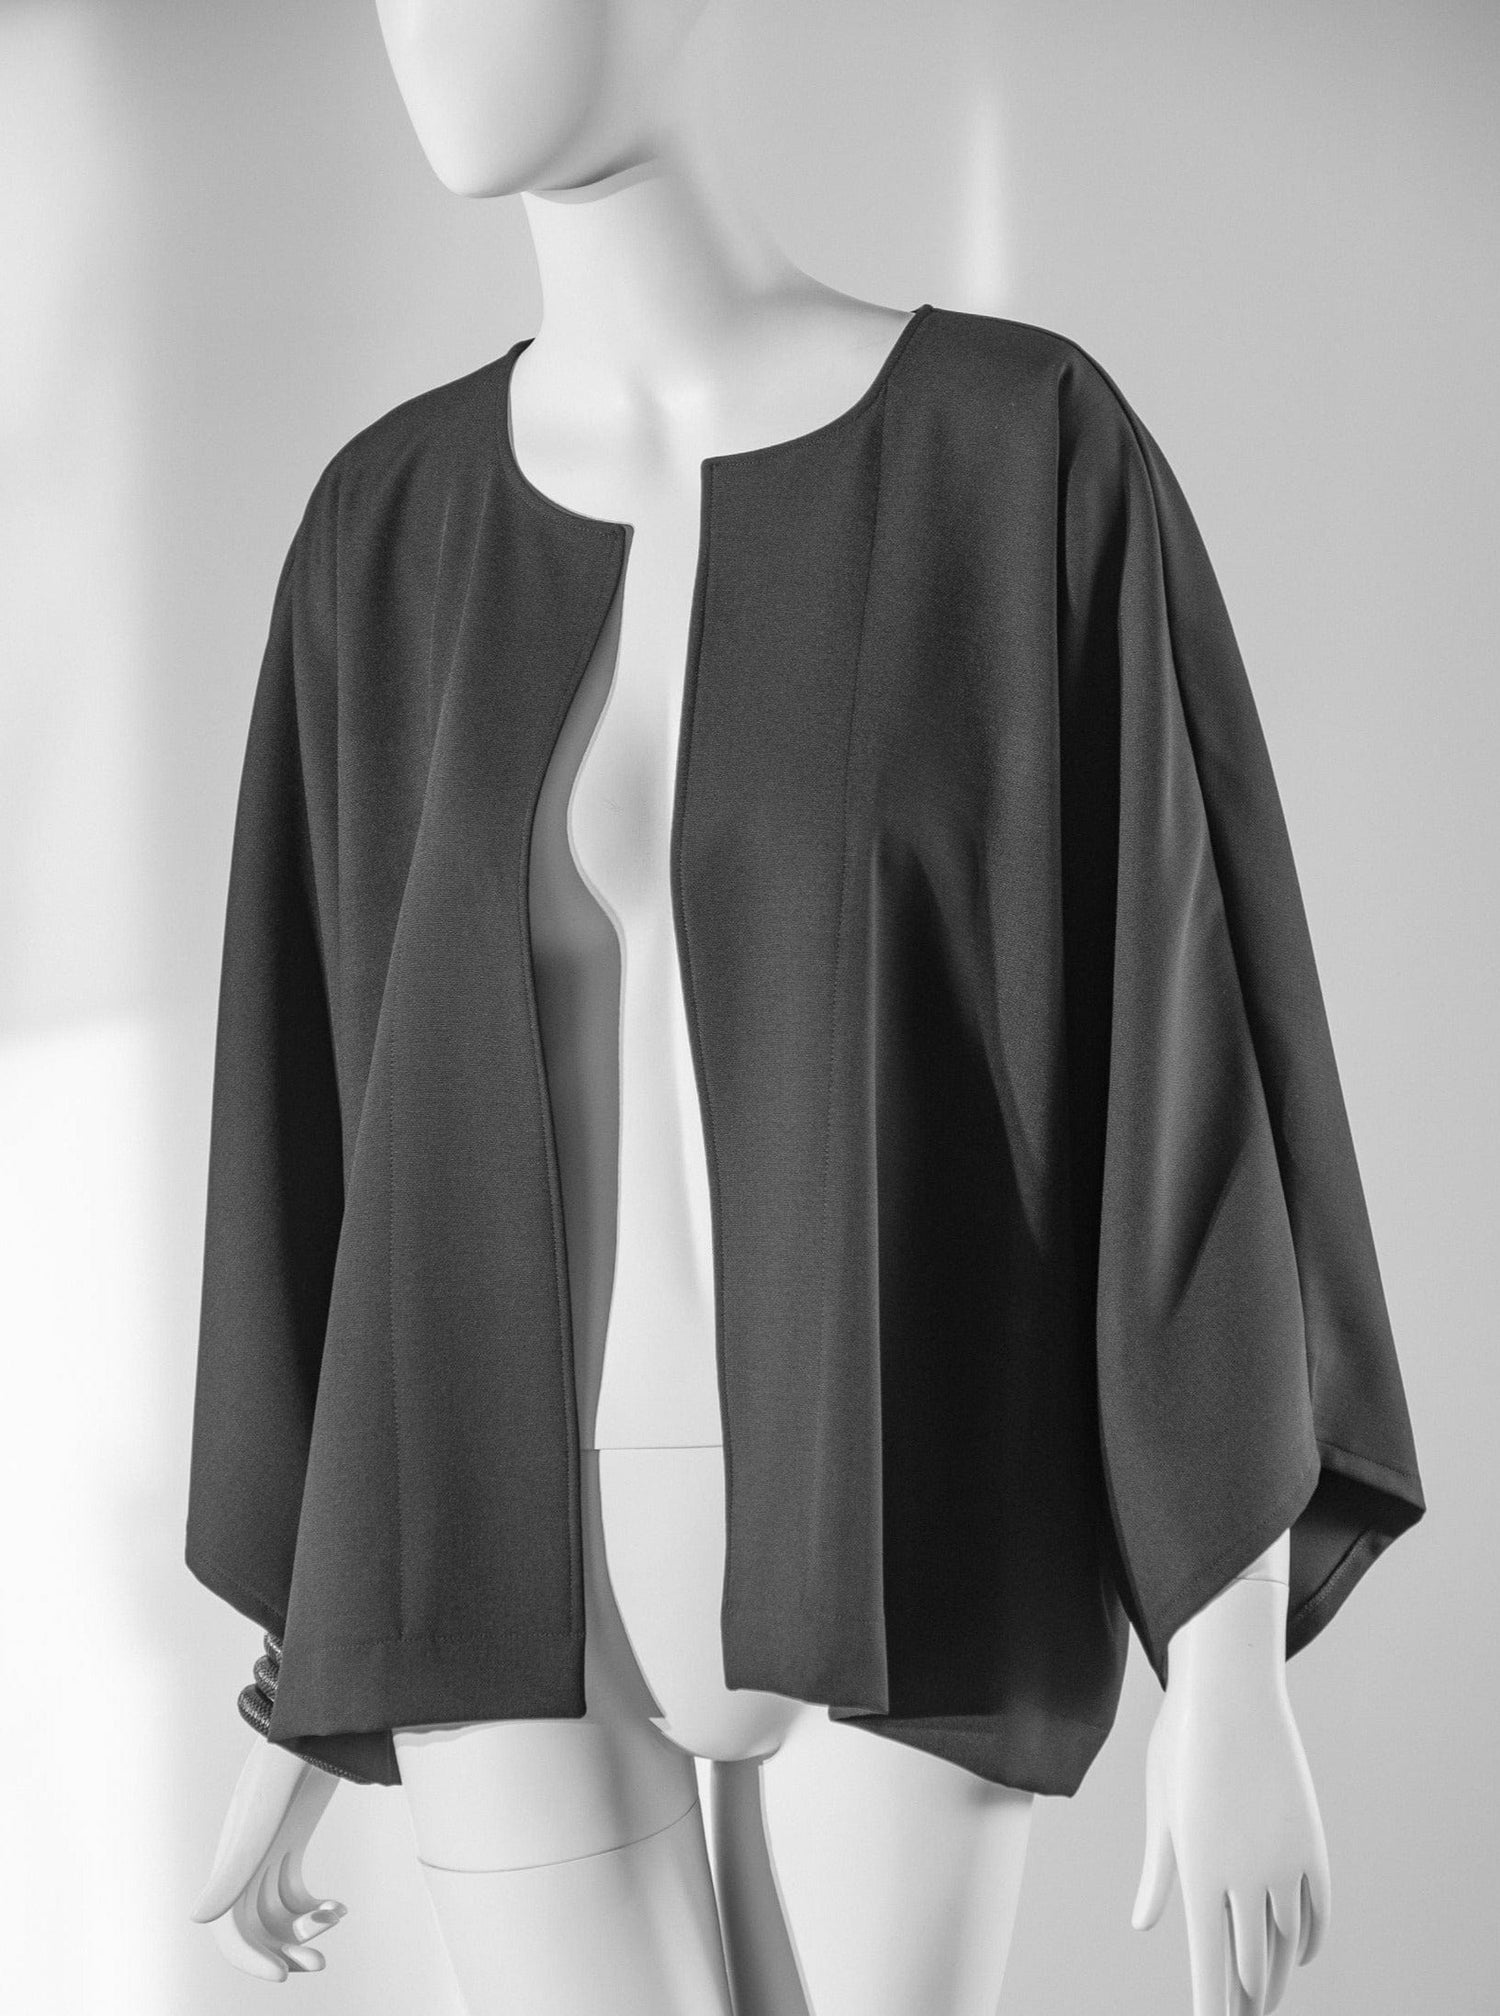 BEVERLY SMART veste VESTE kimono, noire et oversize